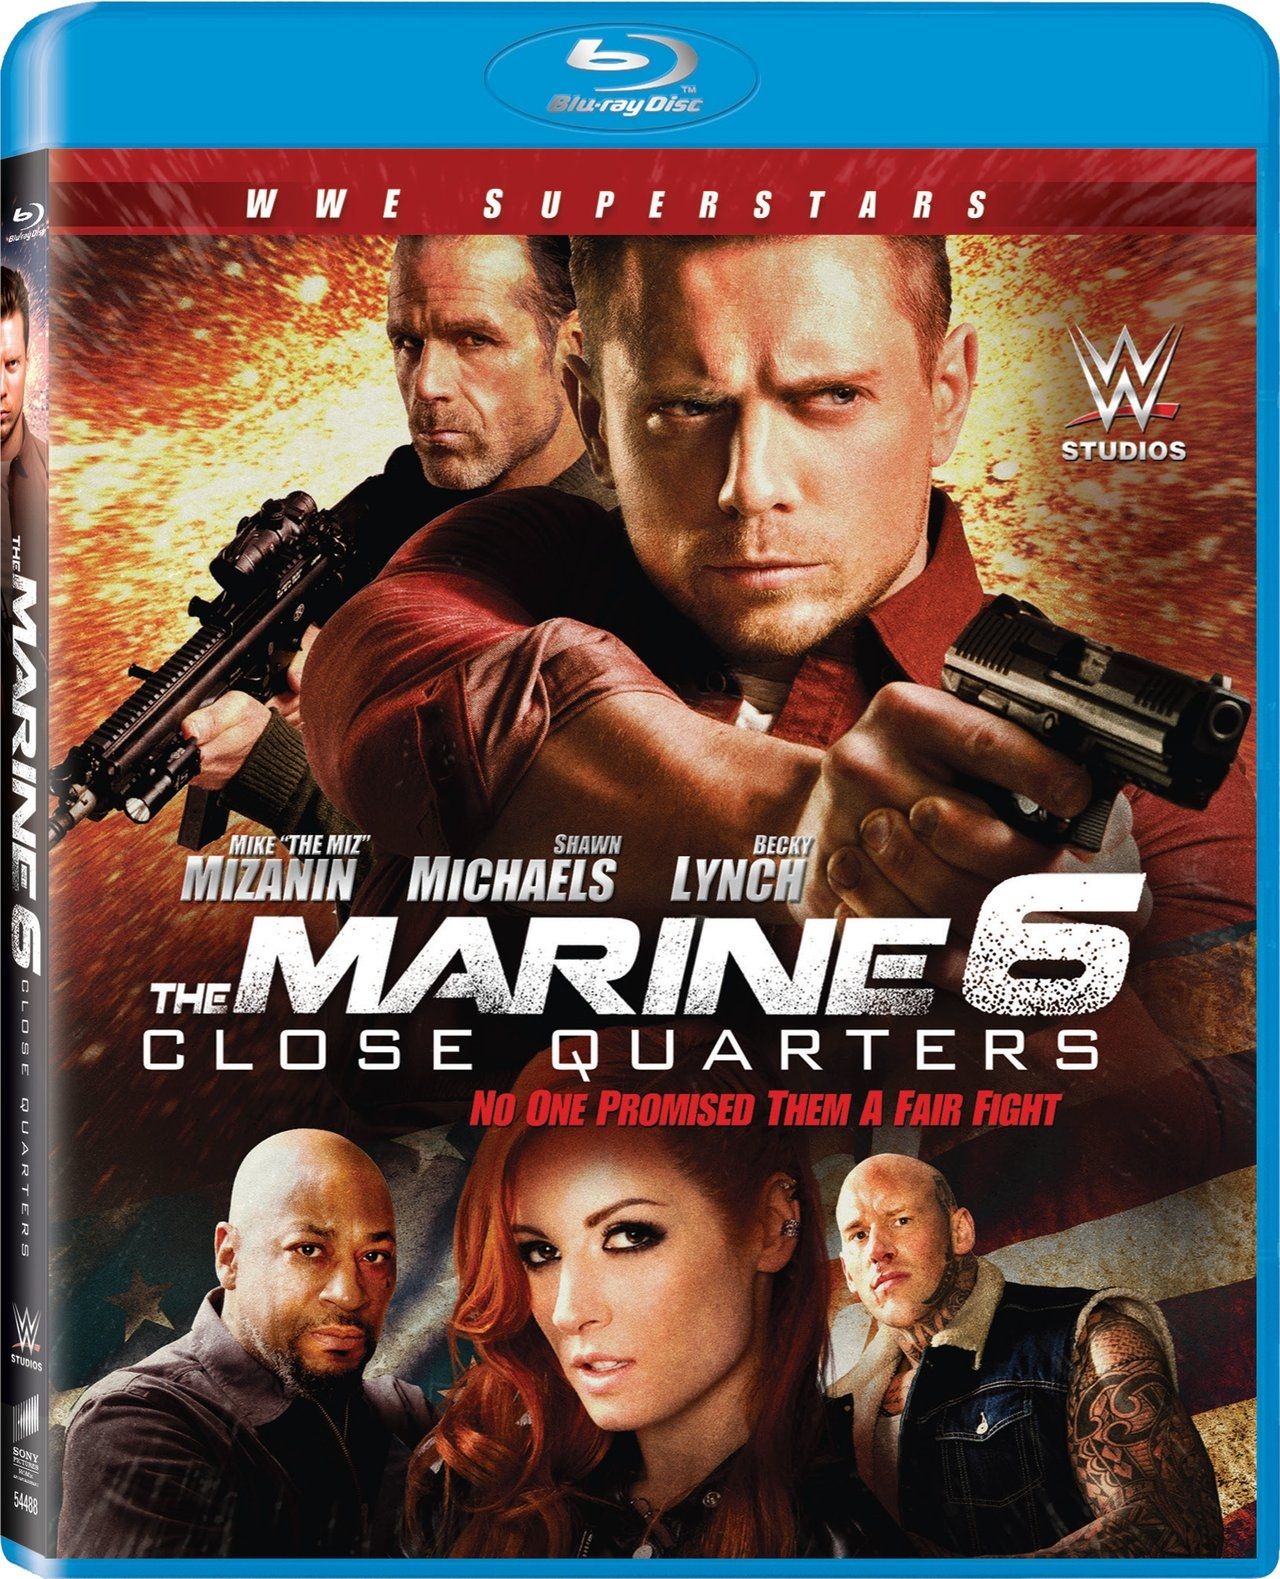 The Marine 6 Blu-ray cover art